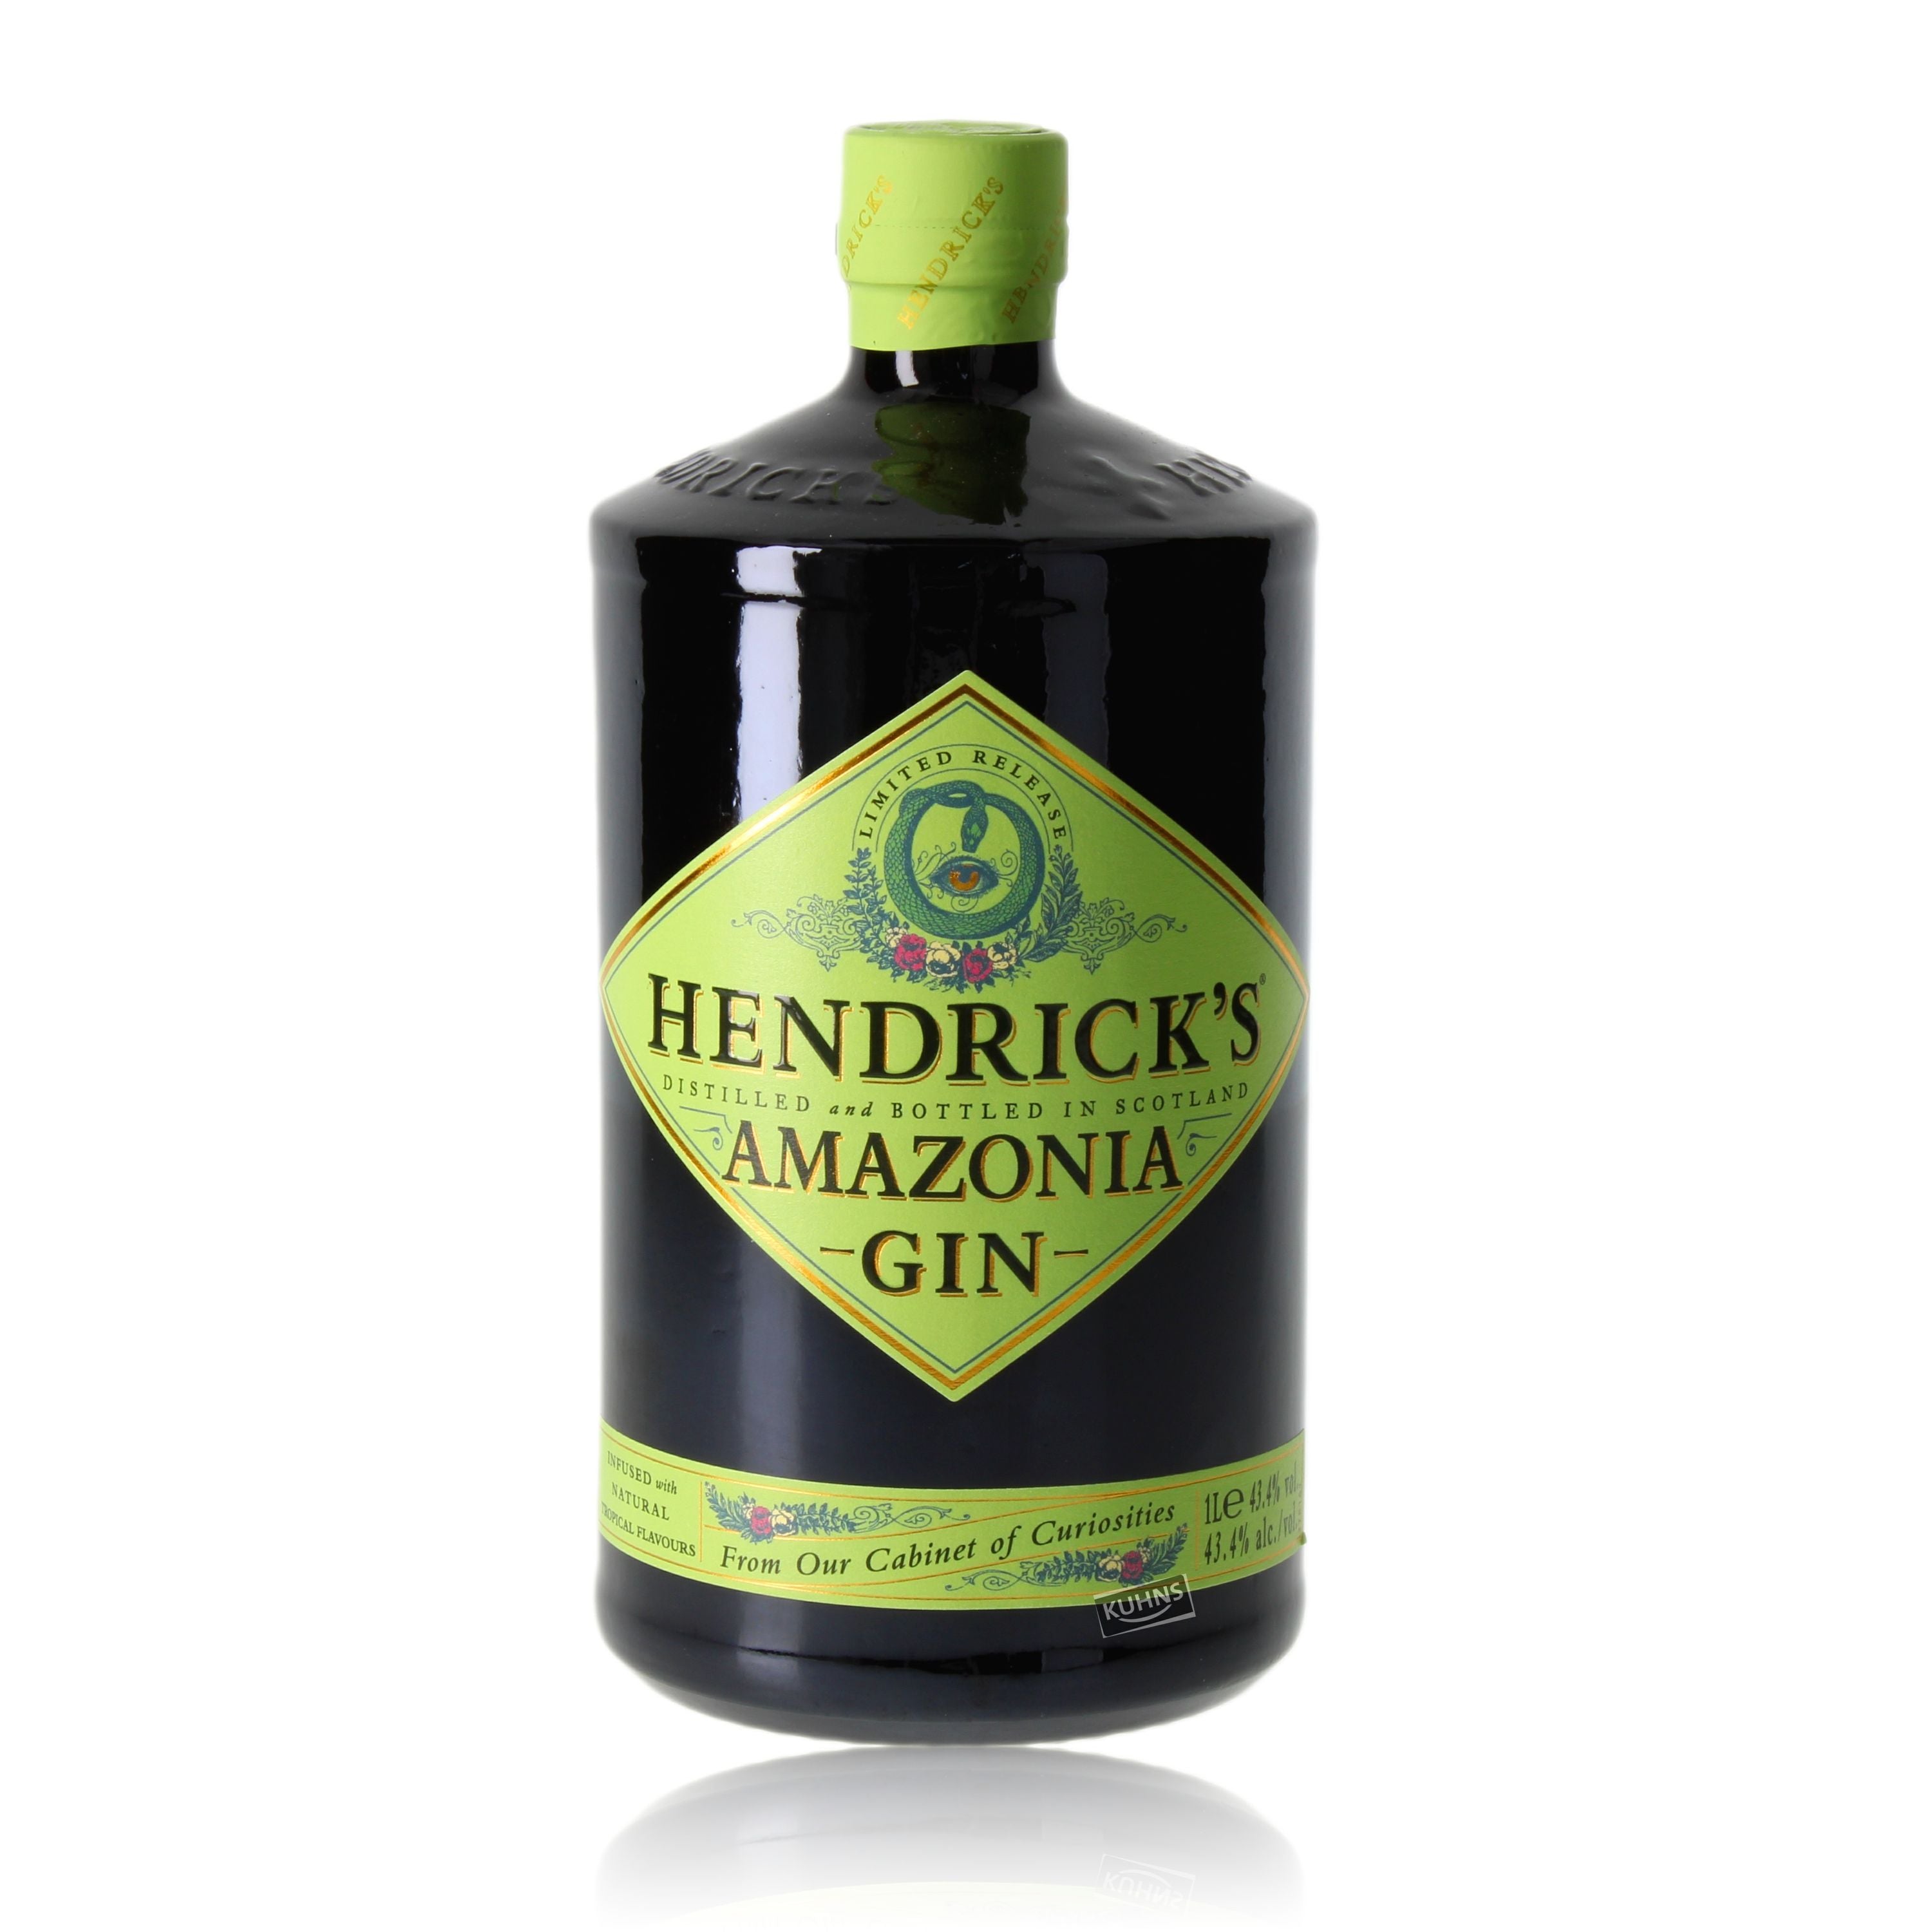 Hendrick's Amazonia Gin 1.0l, alc. 43.4% ABV, Gin Scotland